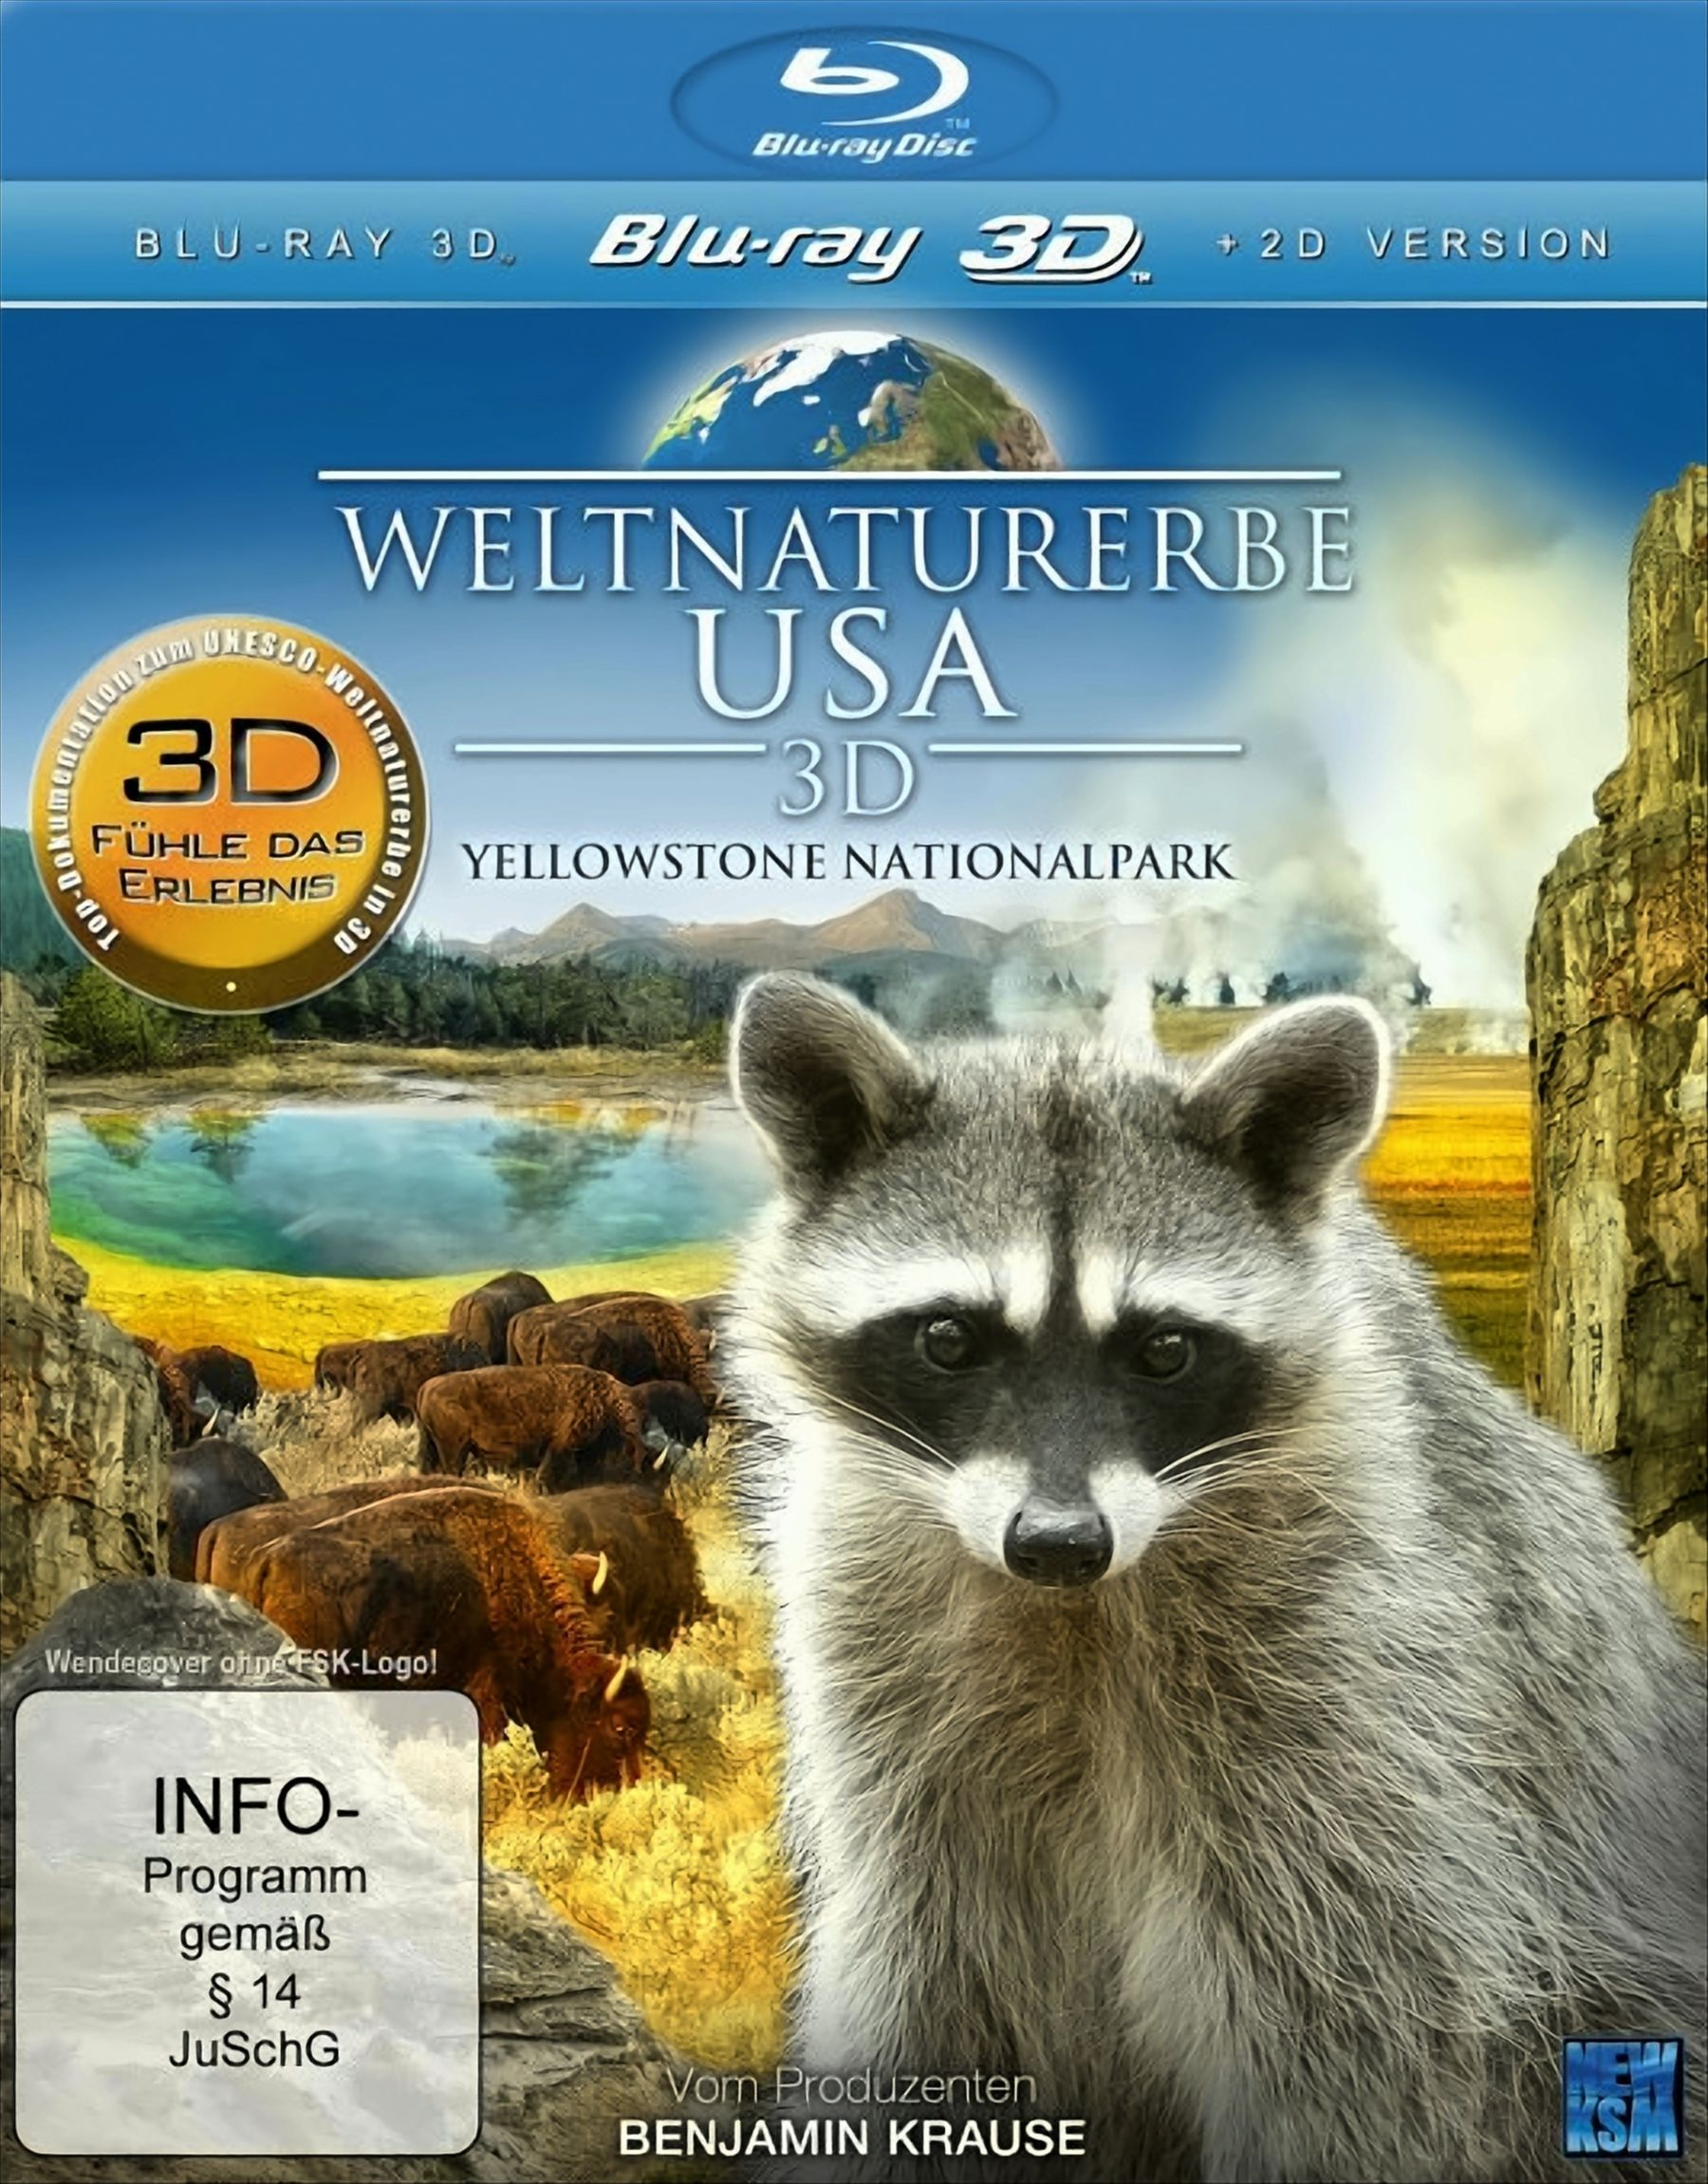 Weltnaturerbe (Blu-ray Blu-ray USA Yellowstone 3D) Nationalpark -